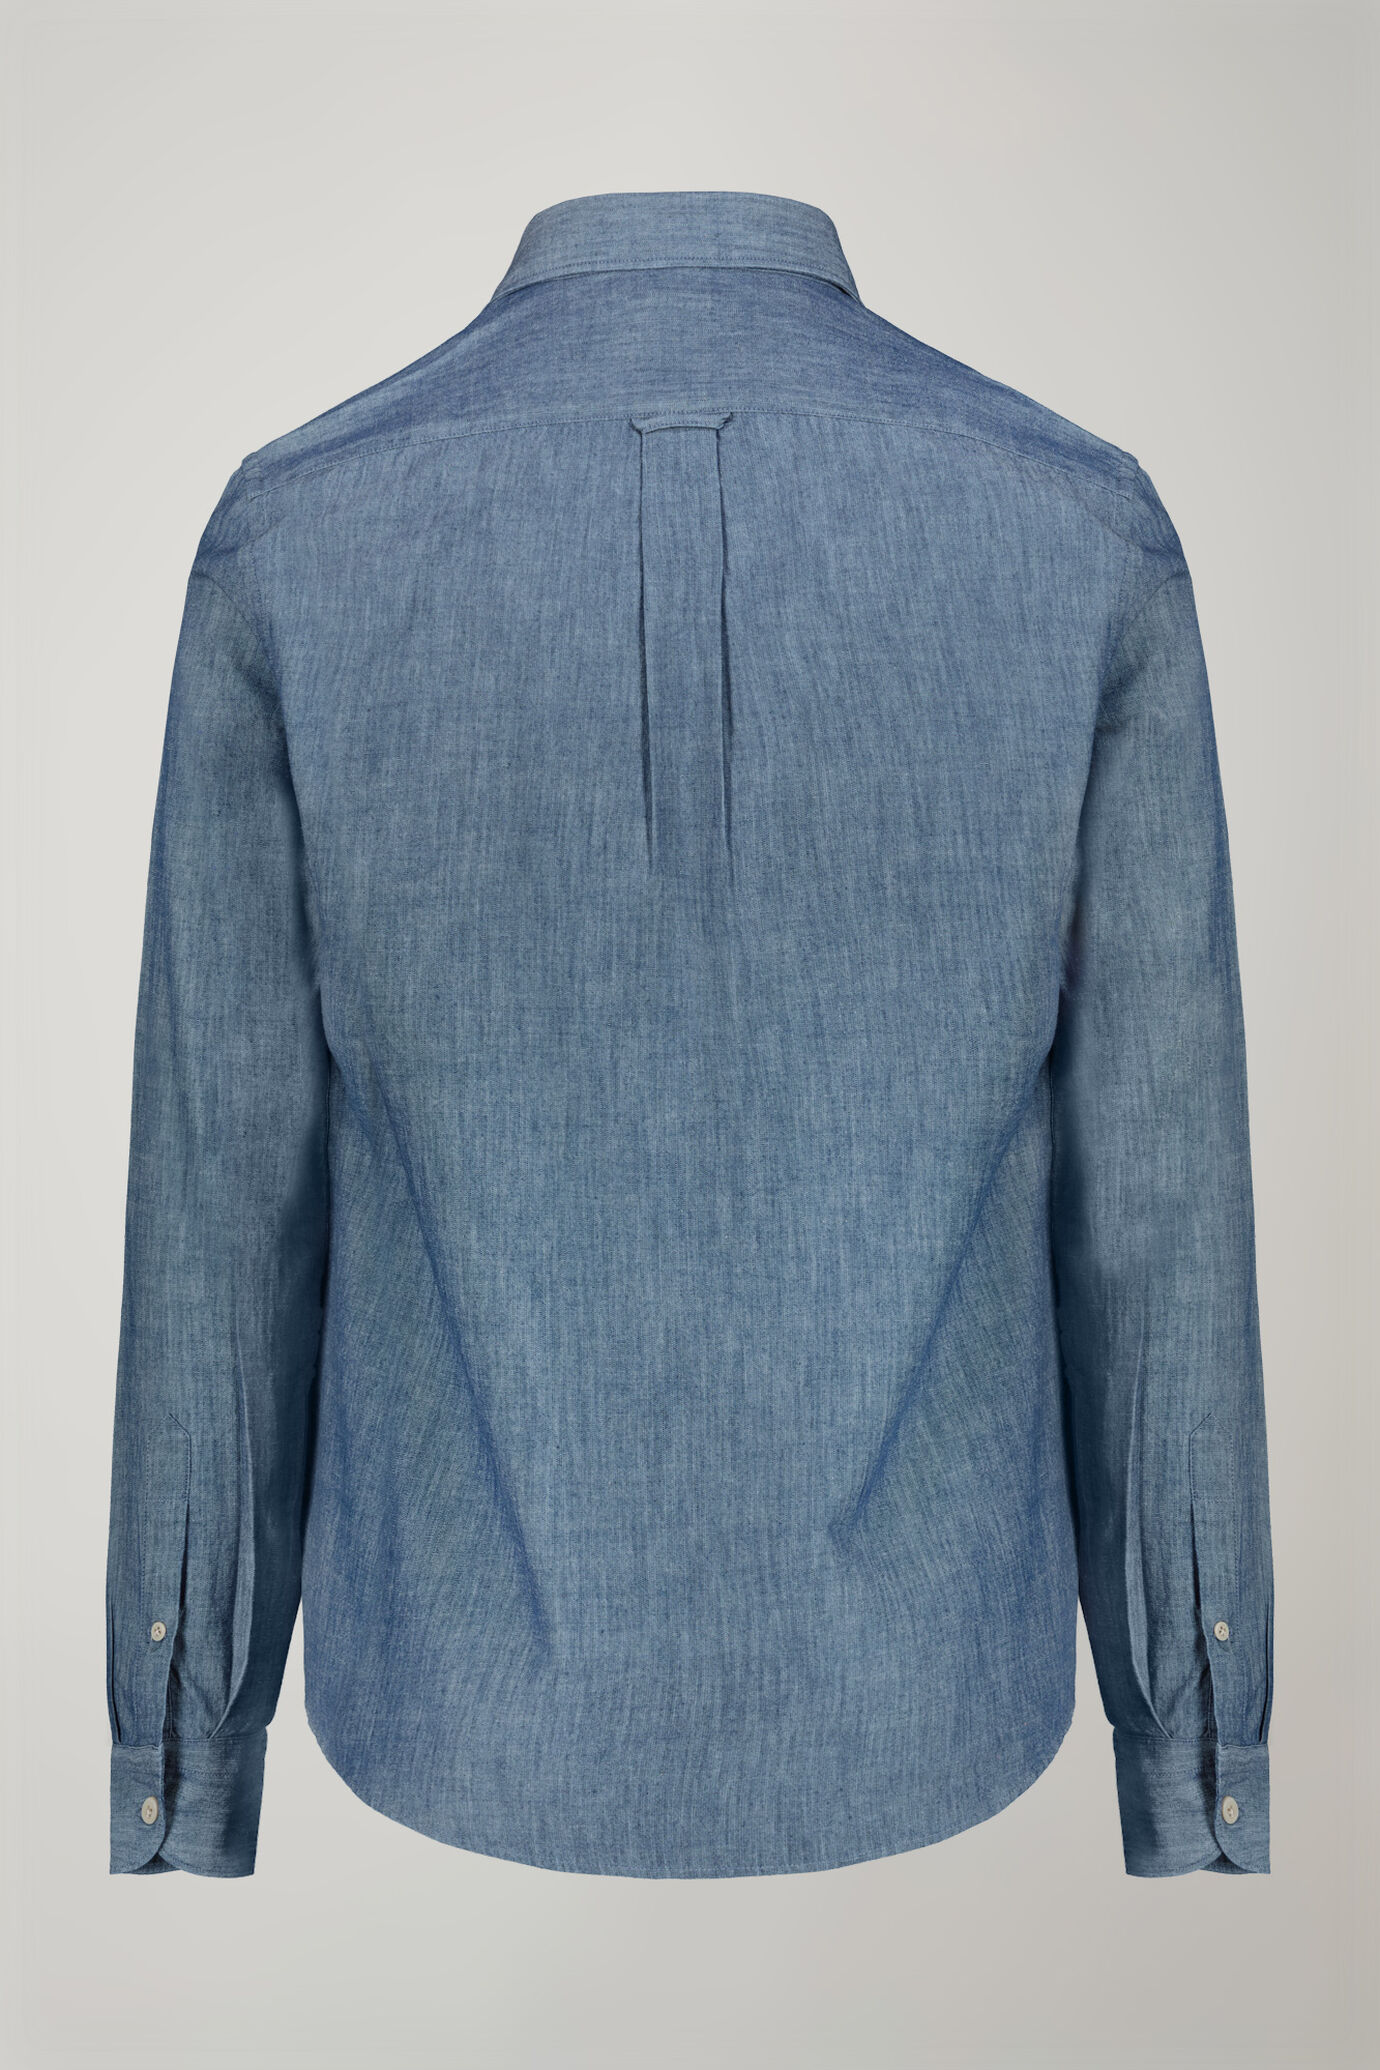 Men’s casual shirt classic collar 100% cotton denim fabric comfort fit image number 6